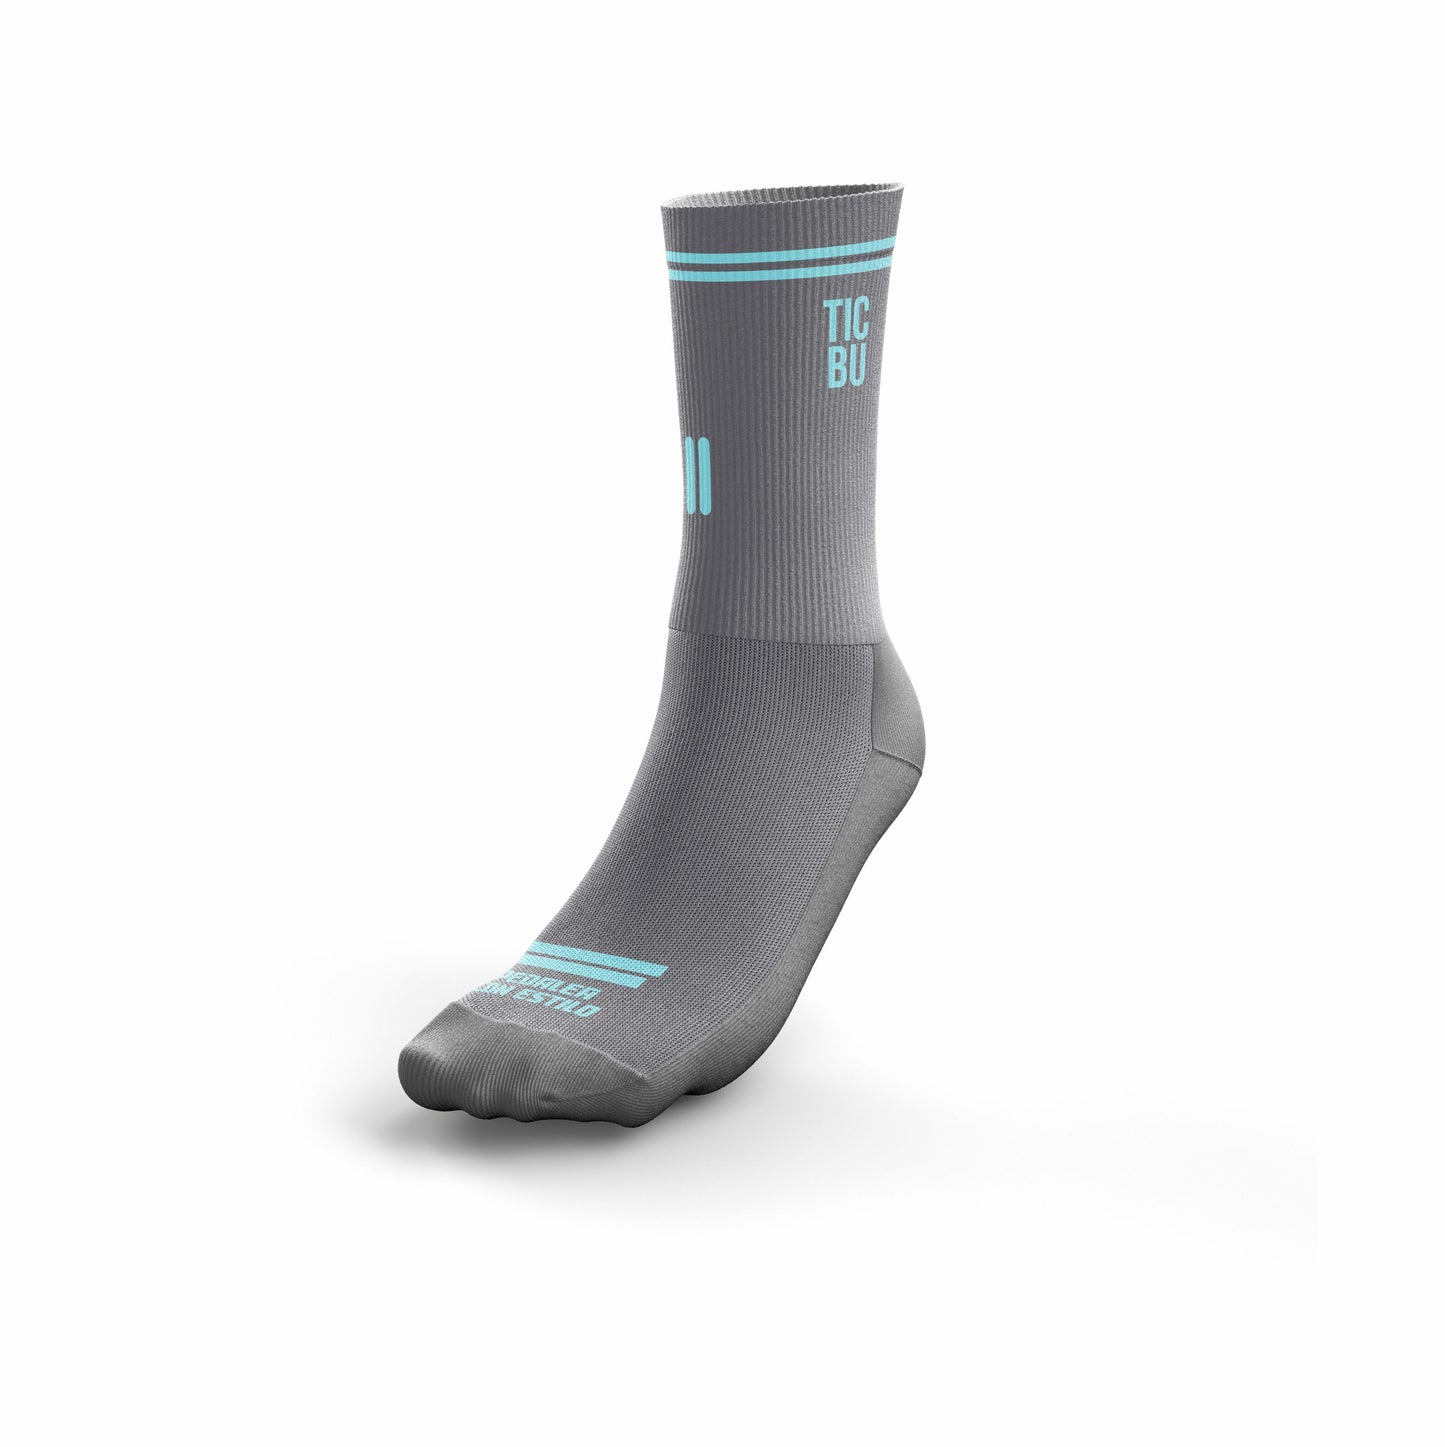 TICBU socks Ref 055